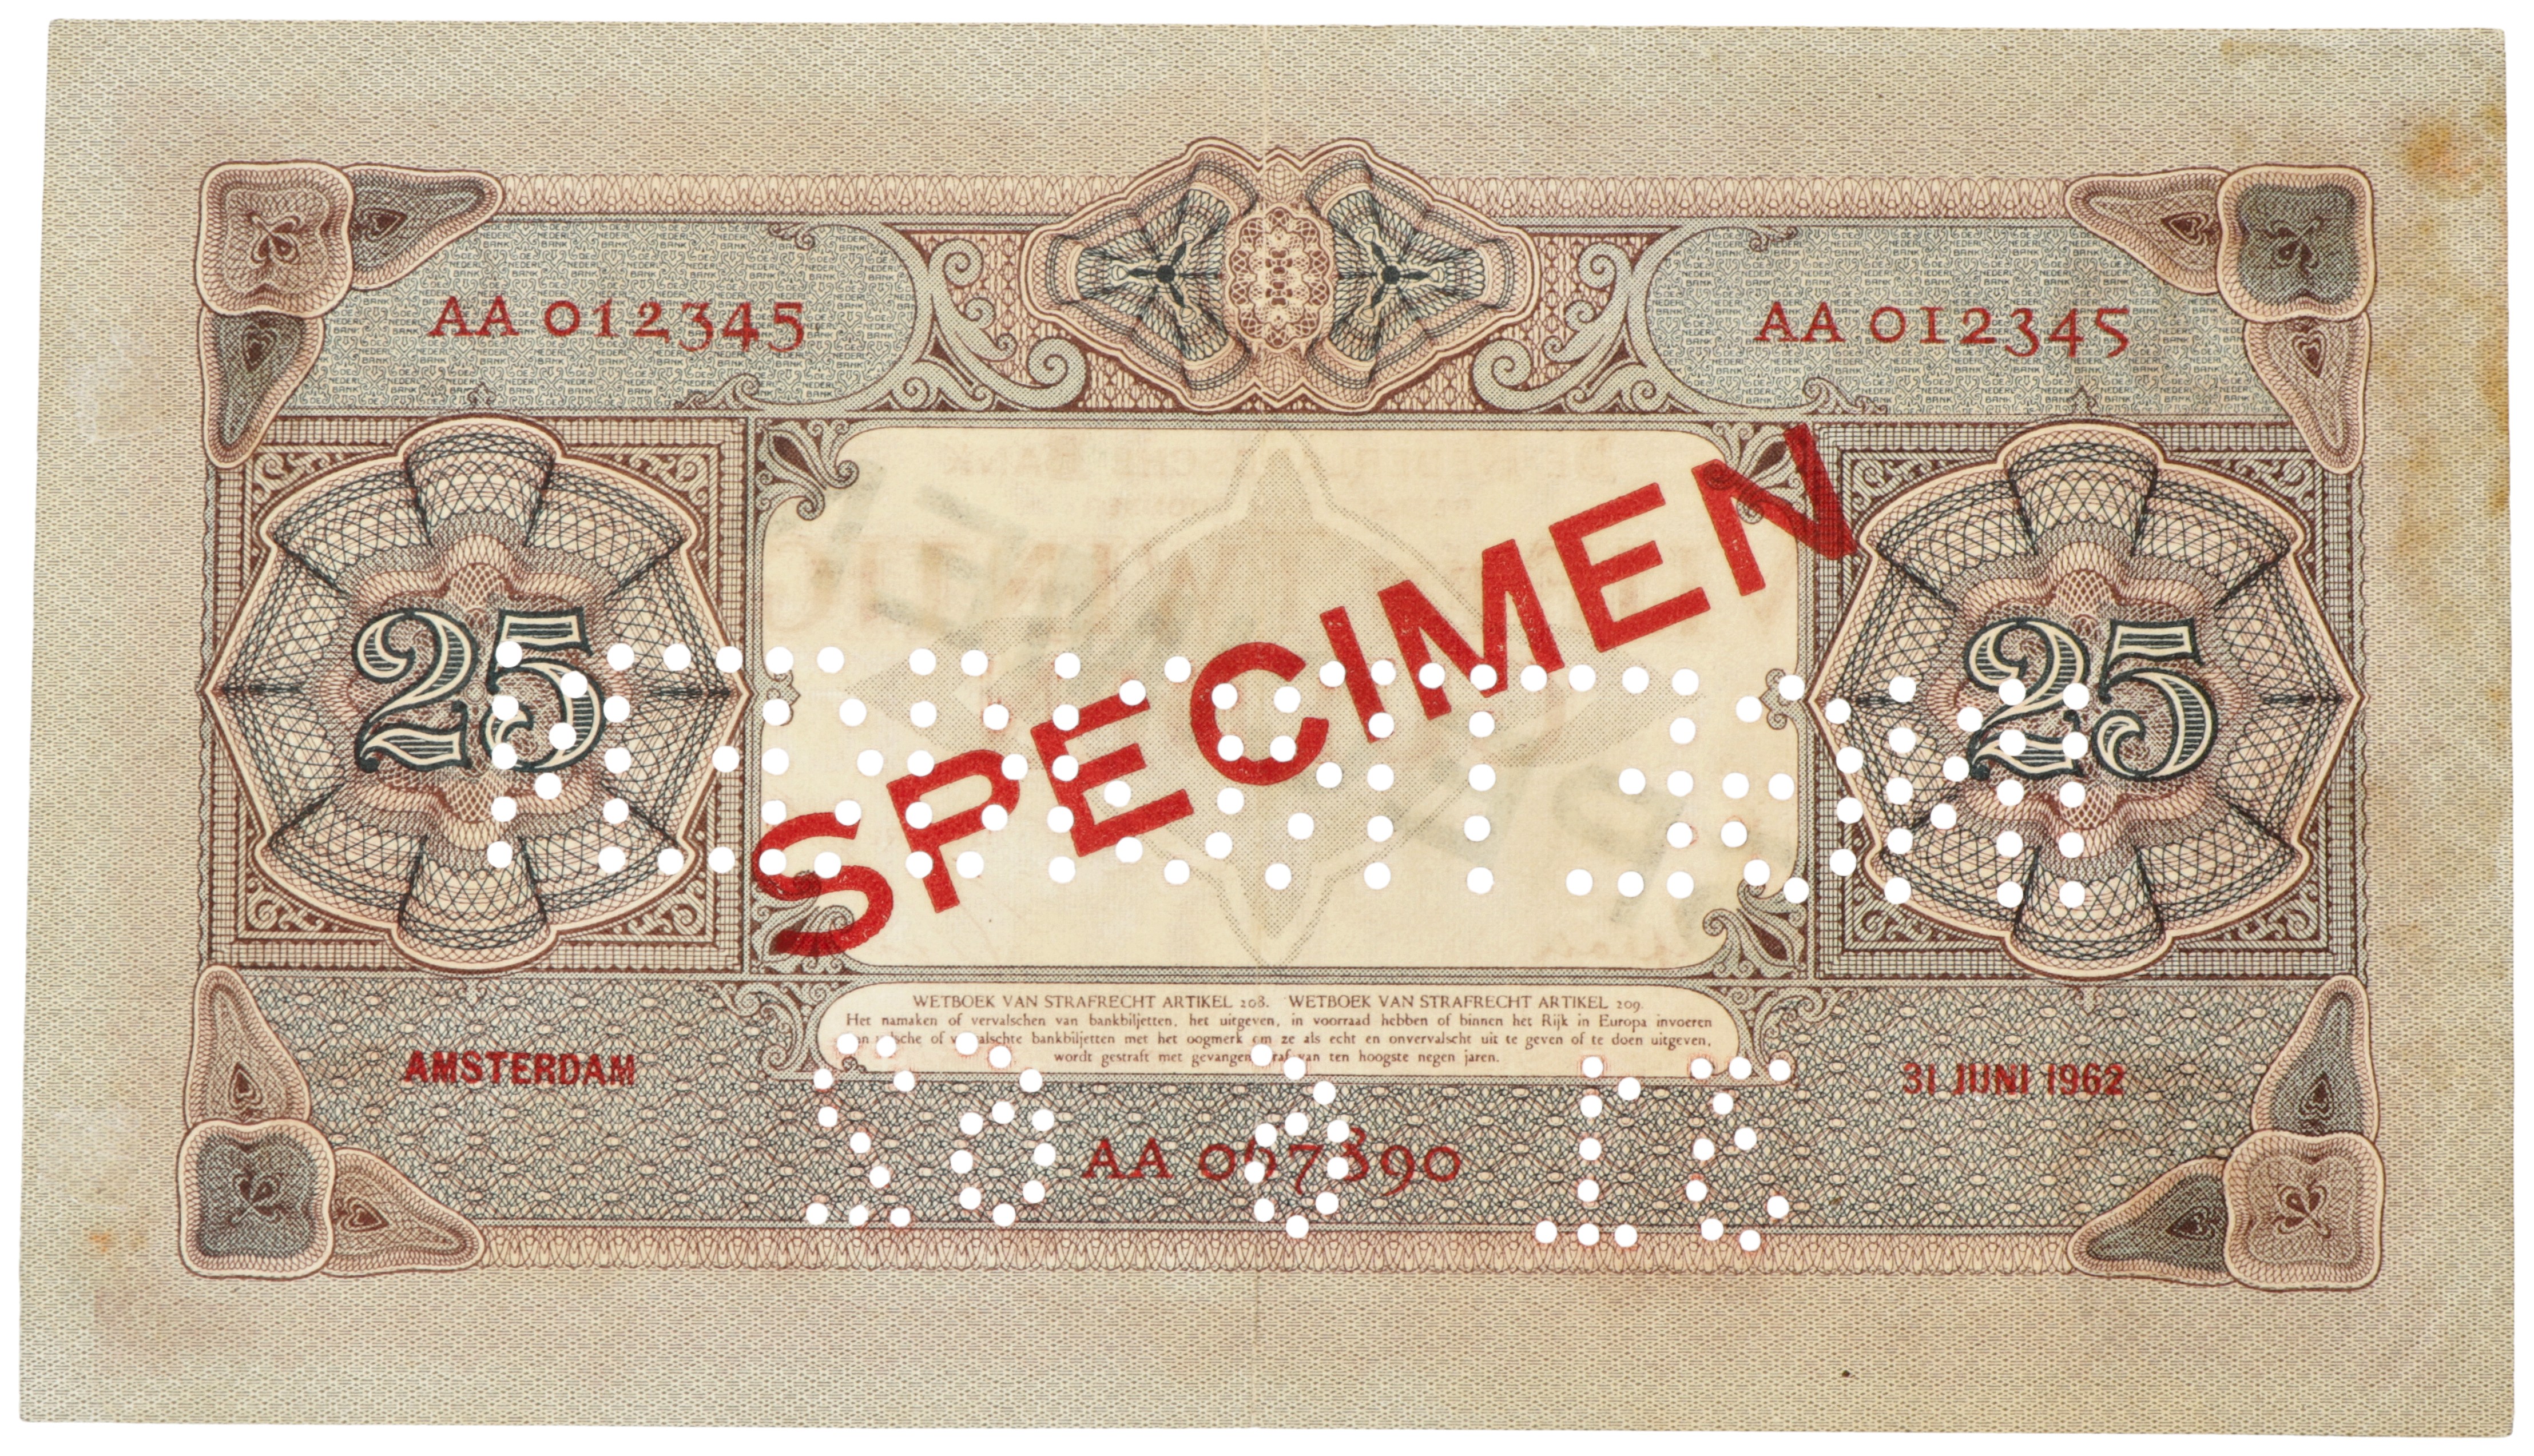 Nederland. 25 Gulden. Bankbiljet. Type 1929. Type Willem van Oranje. Specimen. - Zeer Fraai / Prachtig.